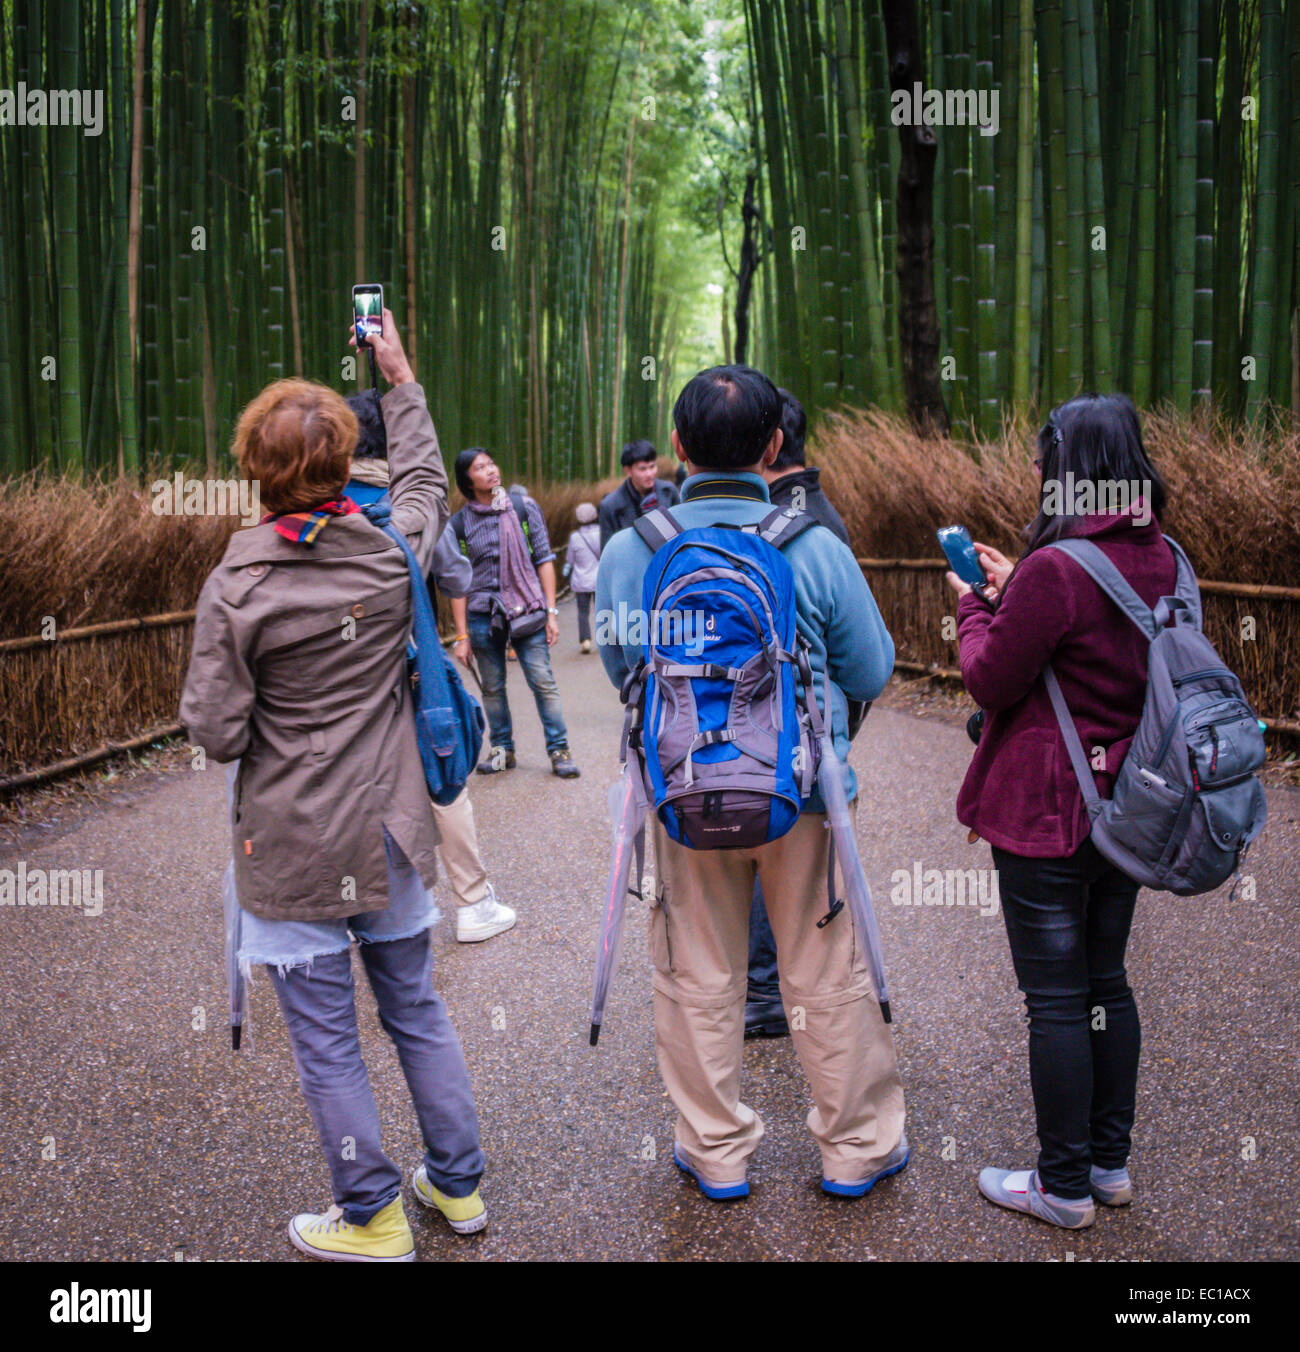 Tourists enjoying the attraction of the bamboo grove at Arashiyama, Kyoto, Japan. Stock Photo